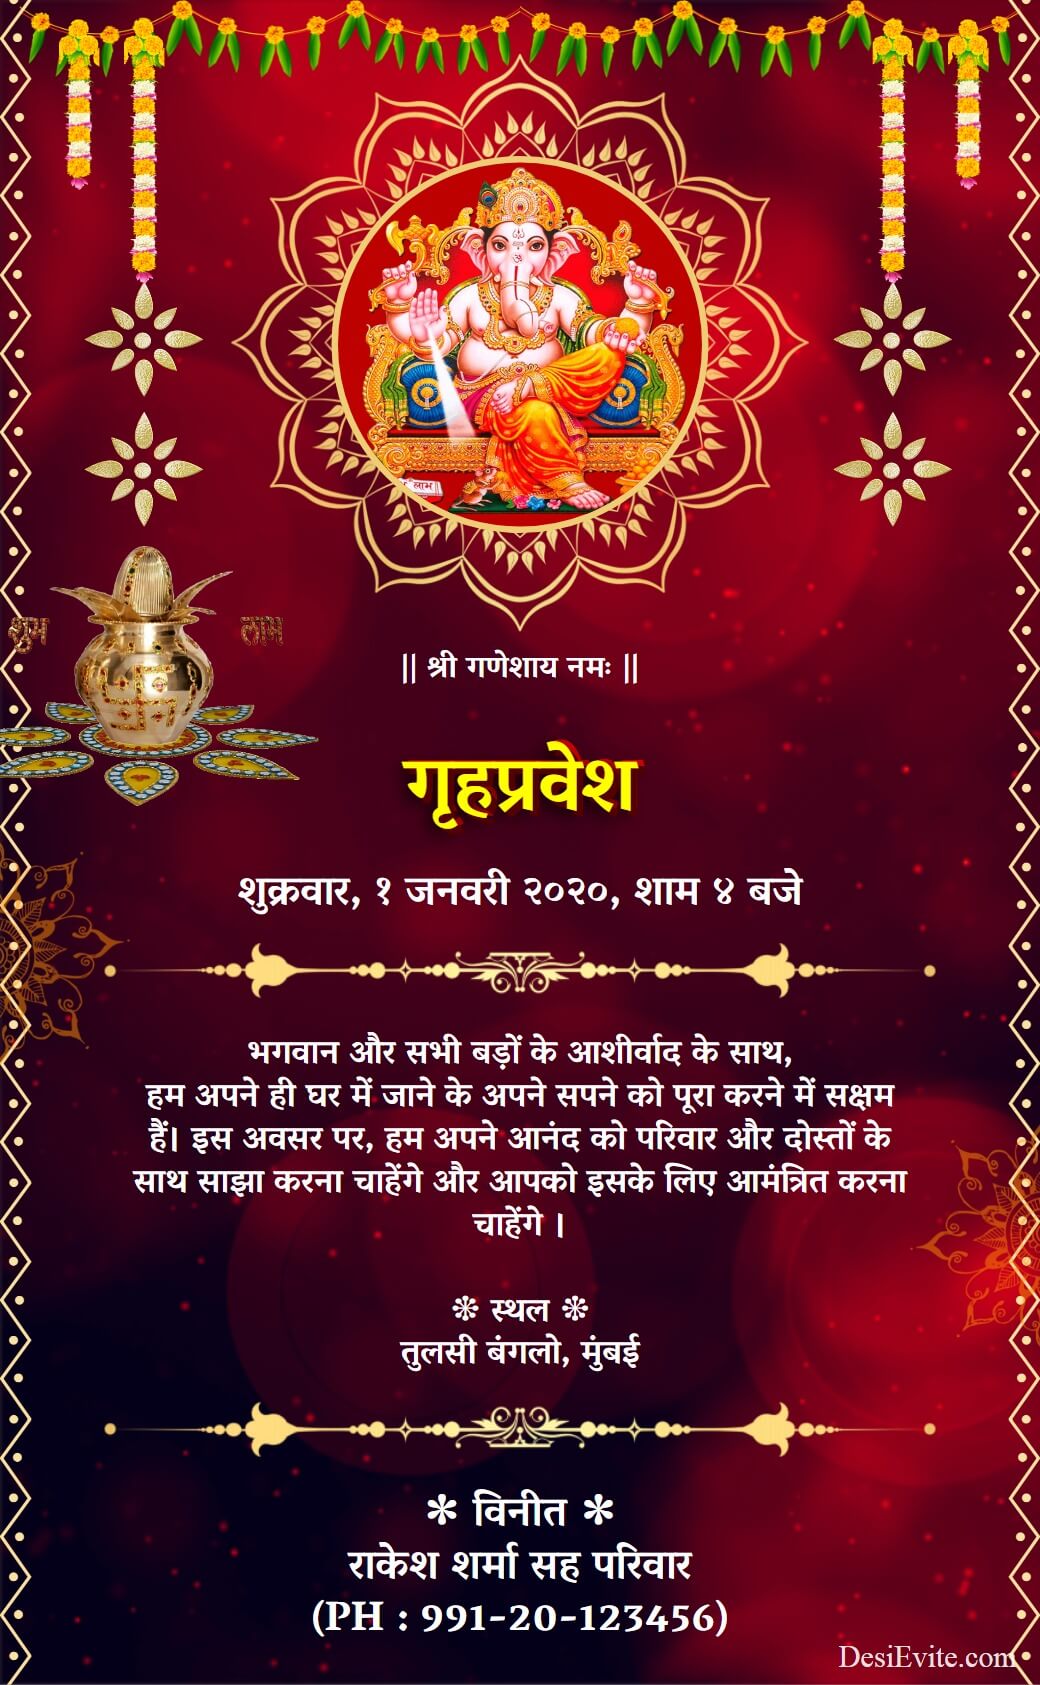 Griha Pravesh Invitation Card In Hindi Editing Free - Infoupdate.org